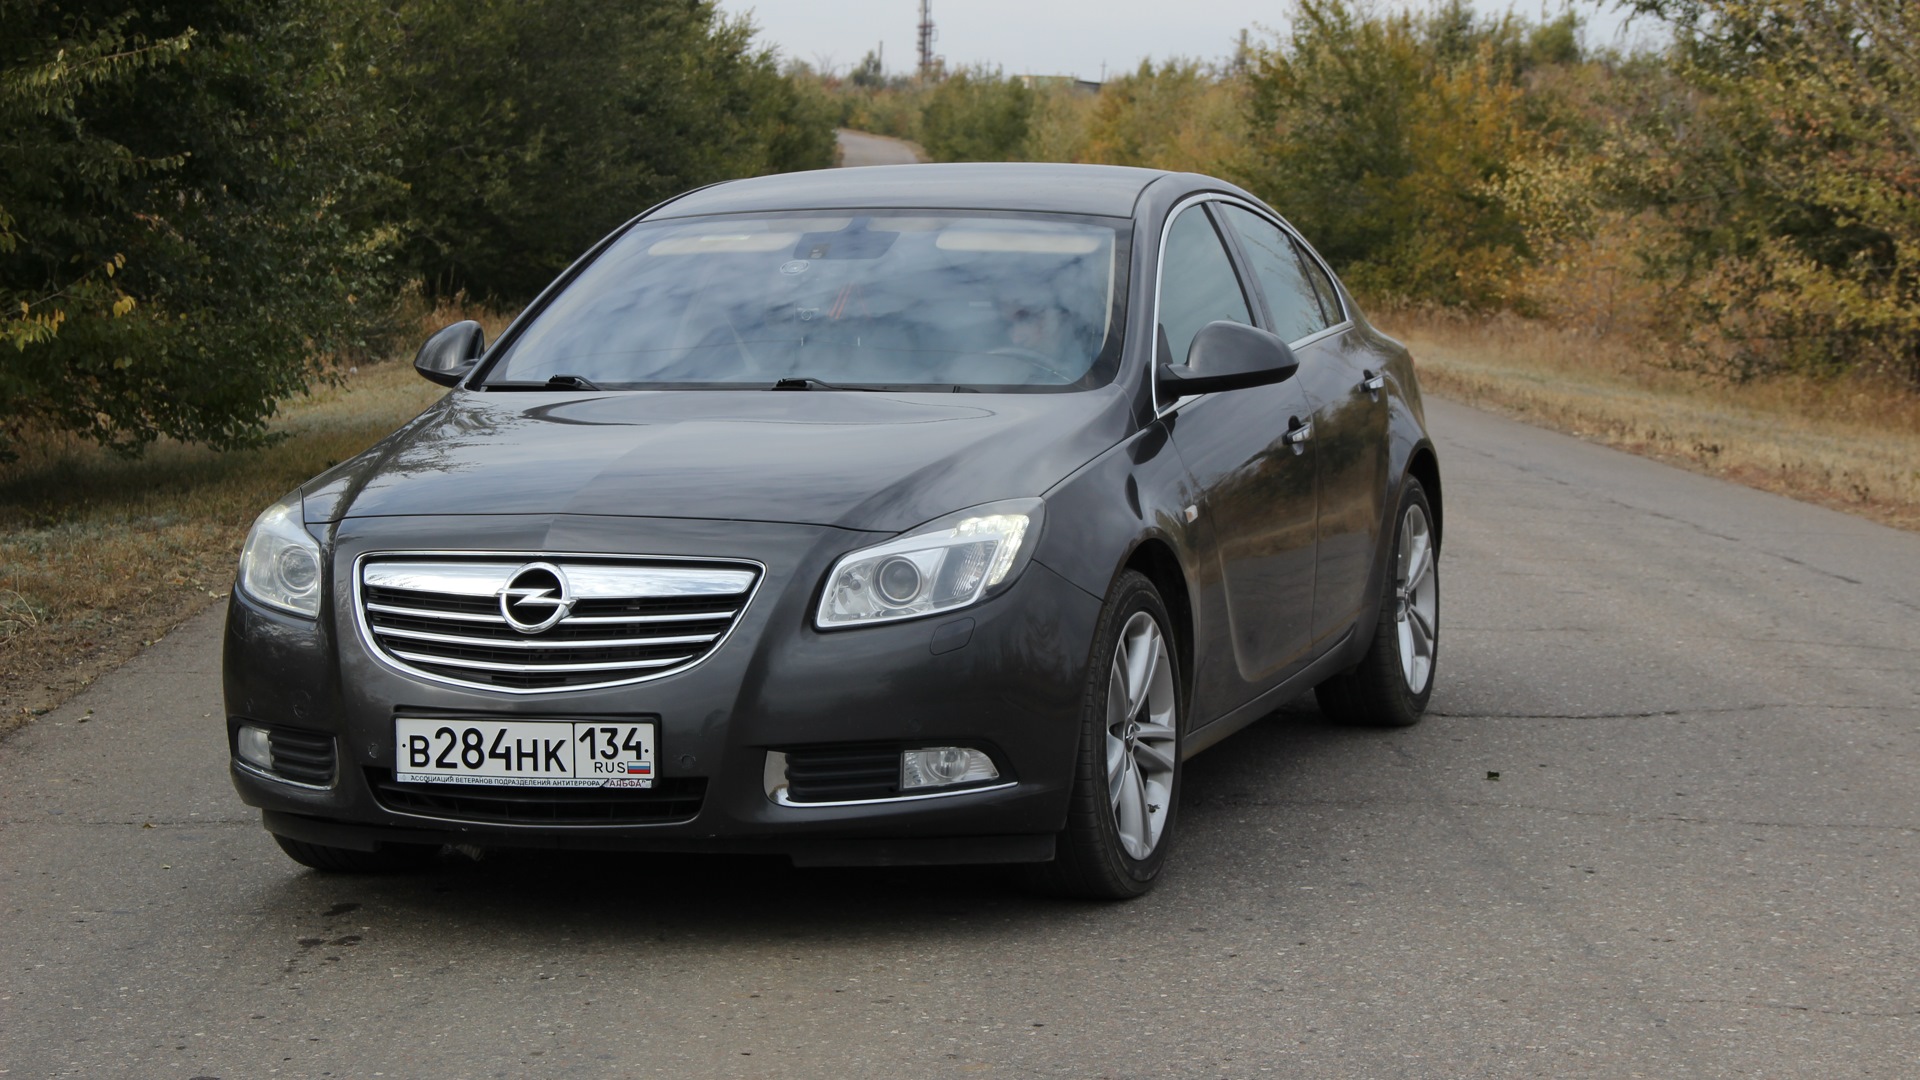 Инсигния 2.0 турбо купить. Opel Insignia 2.0 Turbo. Опель Инсигния 2012 2.0 турбо. Опель Инсигния 2.0 турбо 220 л.с. Опель Инсигния 2010 года хэтчбек.